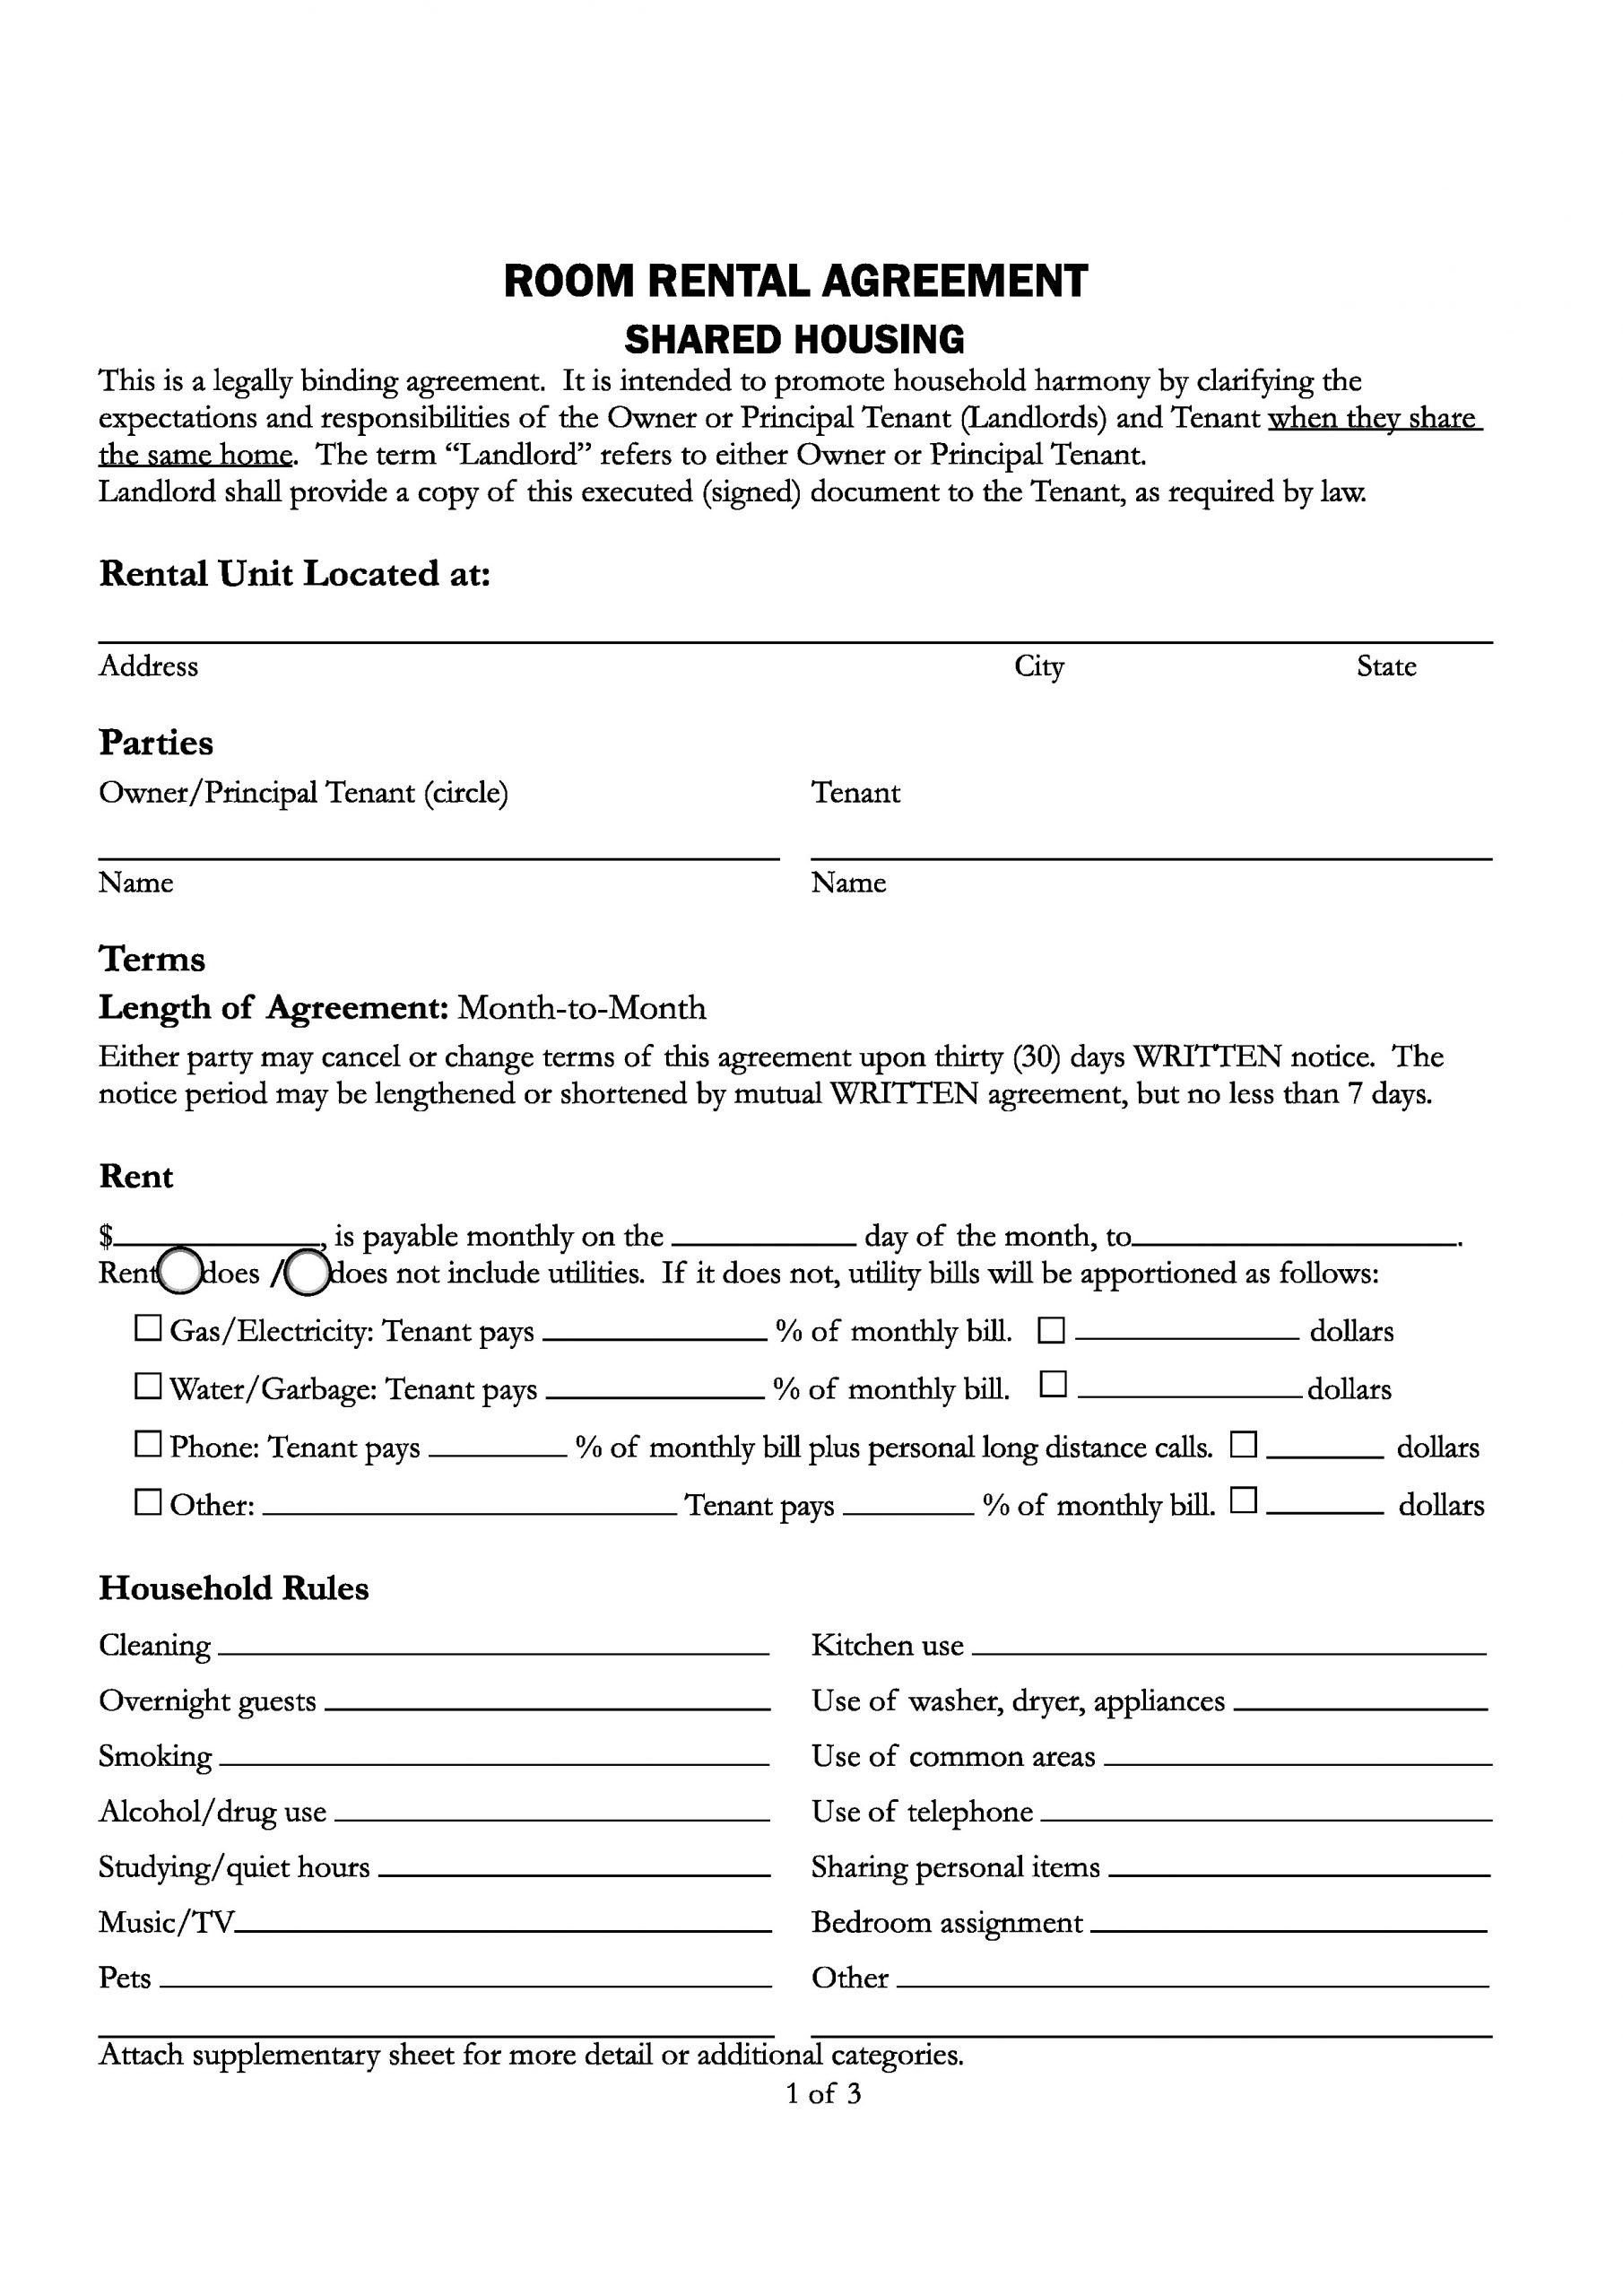 Download Free California Room Rental Agreement Printable 